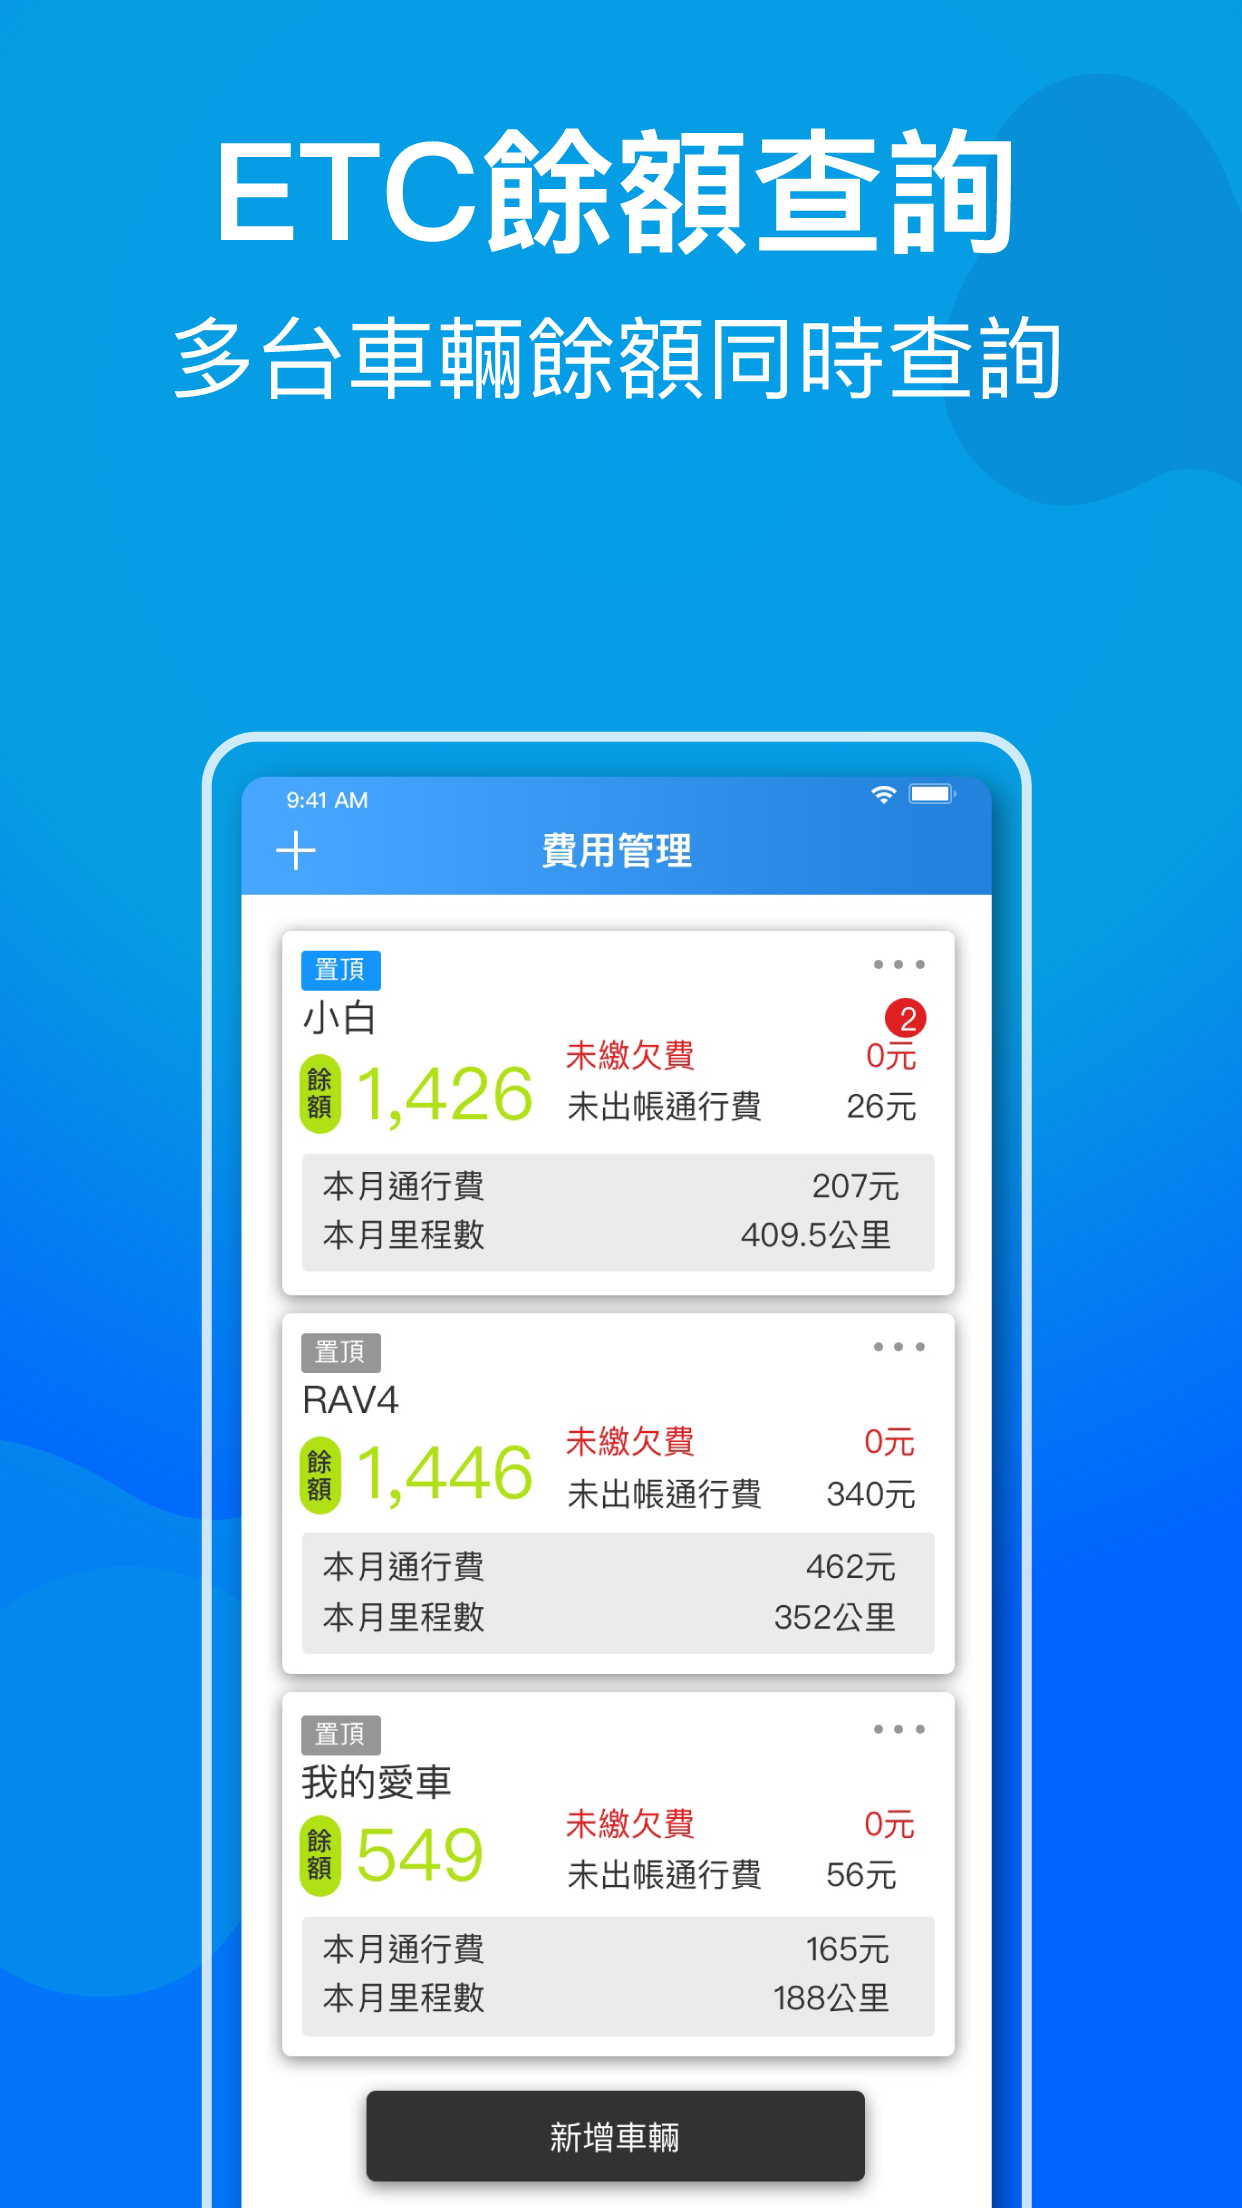 Android application ezETC (測速照相、道路影像、eTag查詢、油價資訊) screenshort